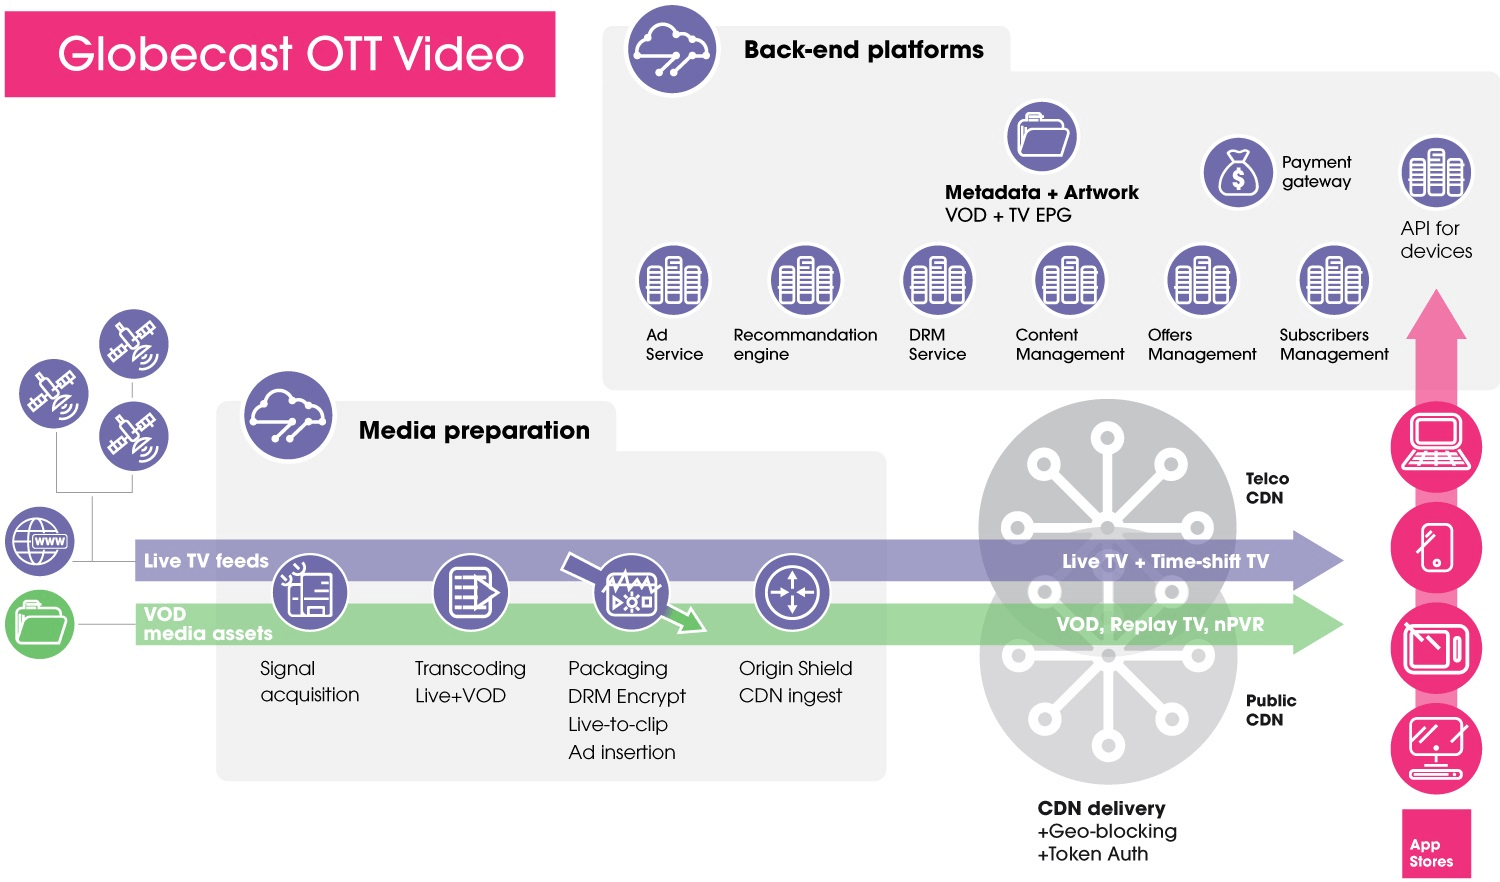 OTT Video by Globecast